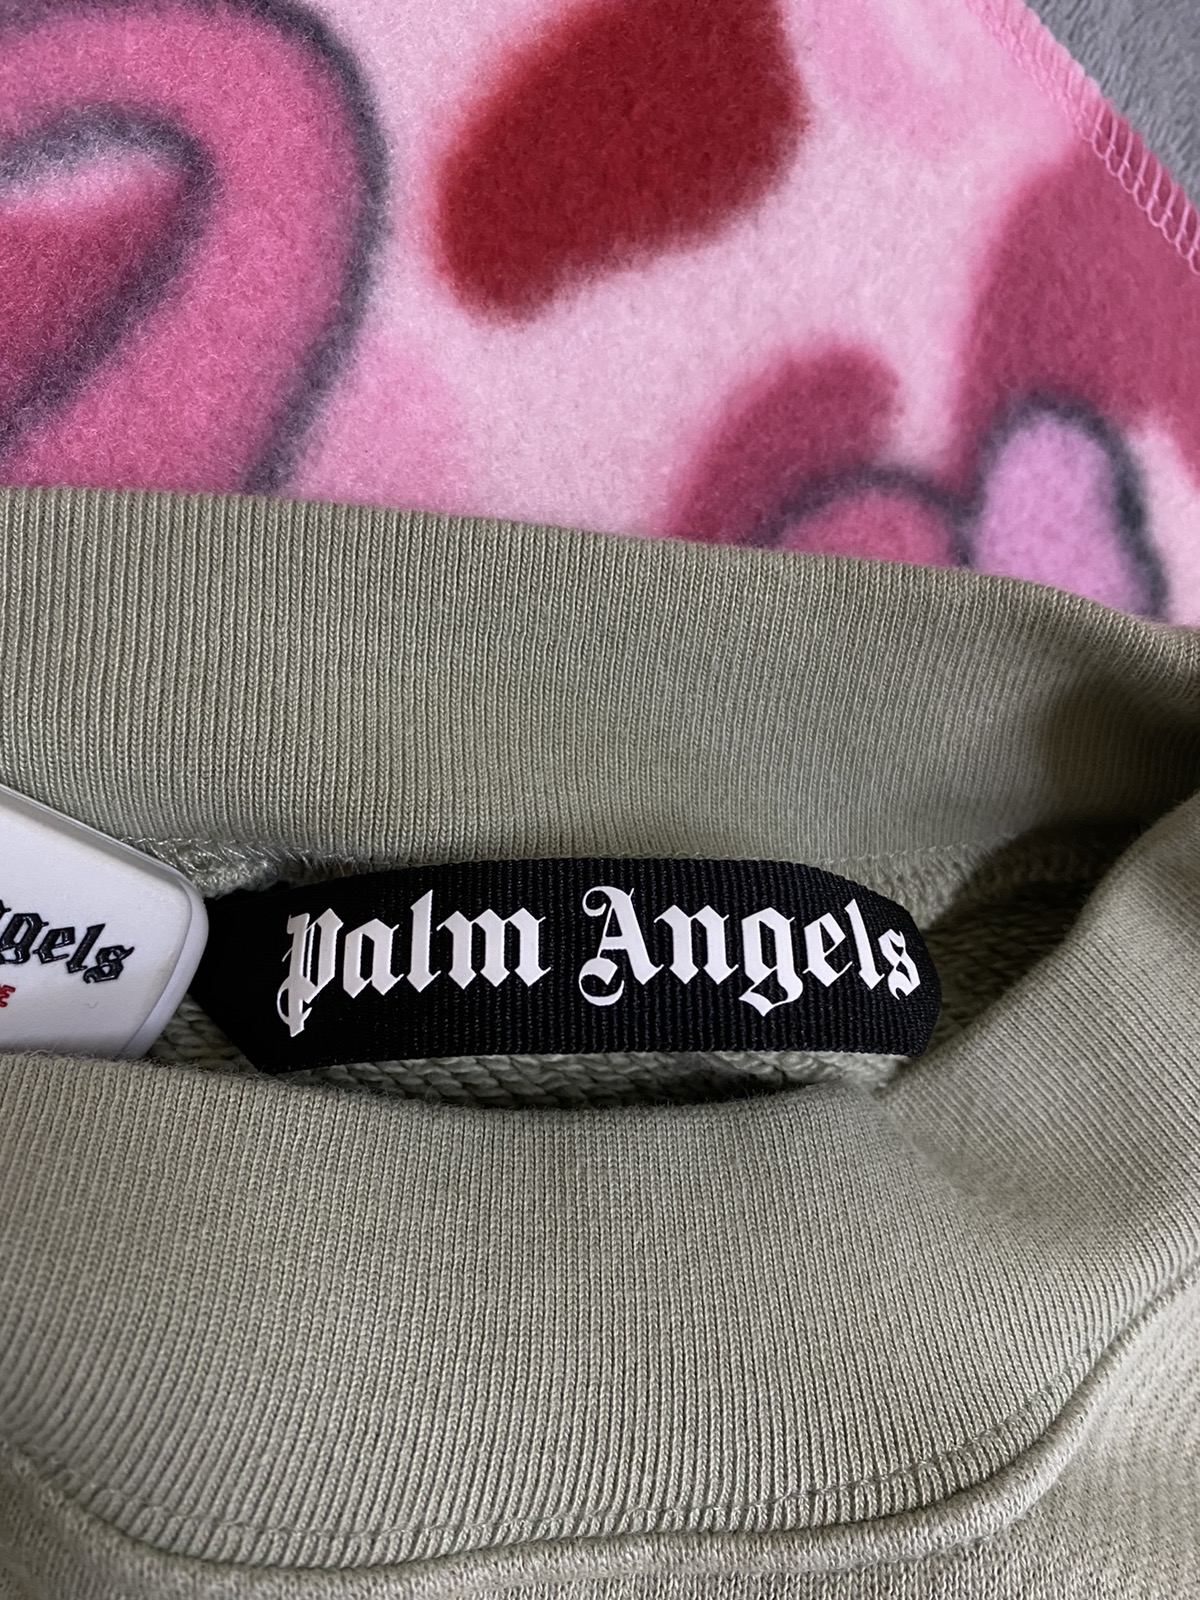 Palm Angels Juggler Pin Up Sweatshirt - 3